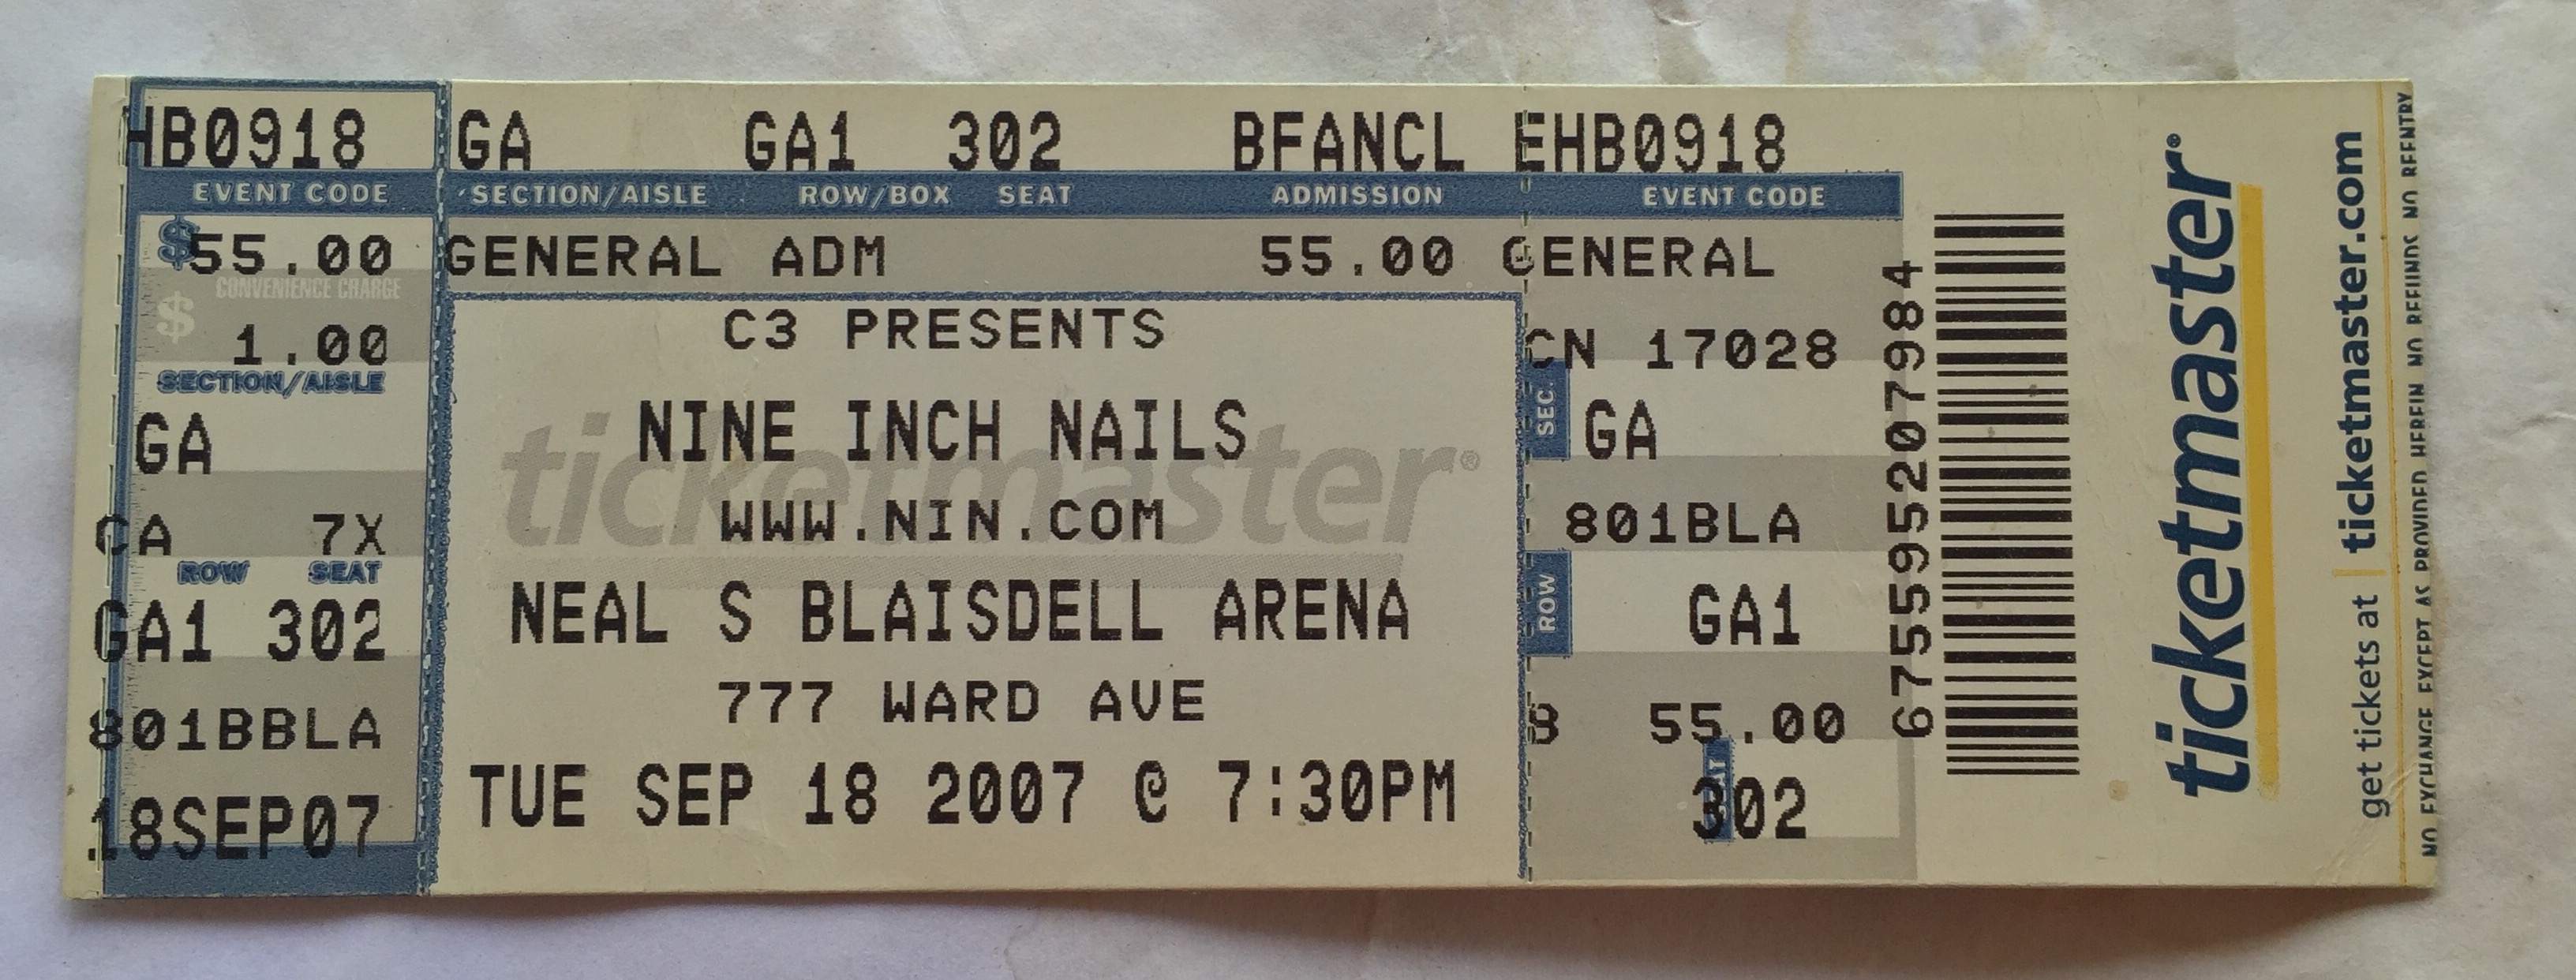 2007/09/18 Ticket